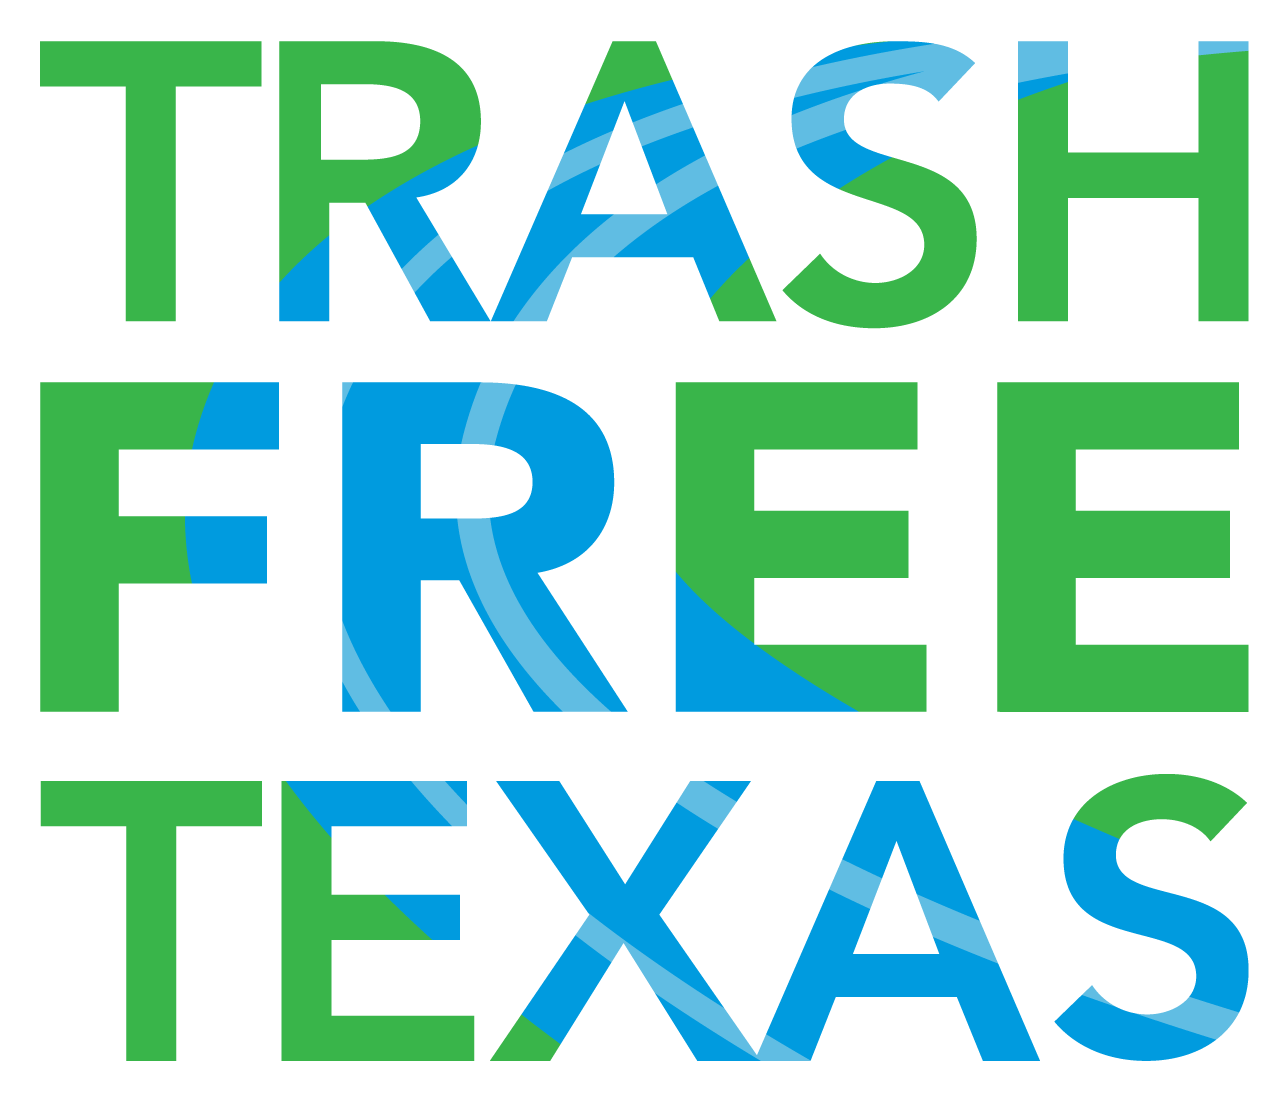 Link to Trash Free Texas site